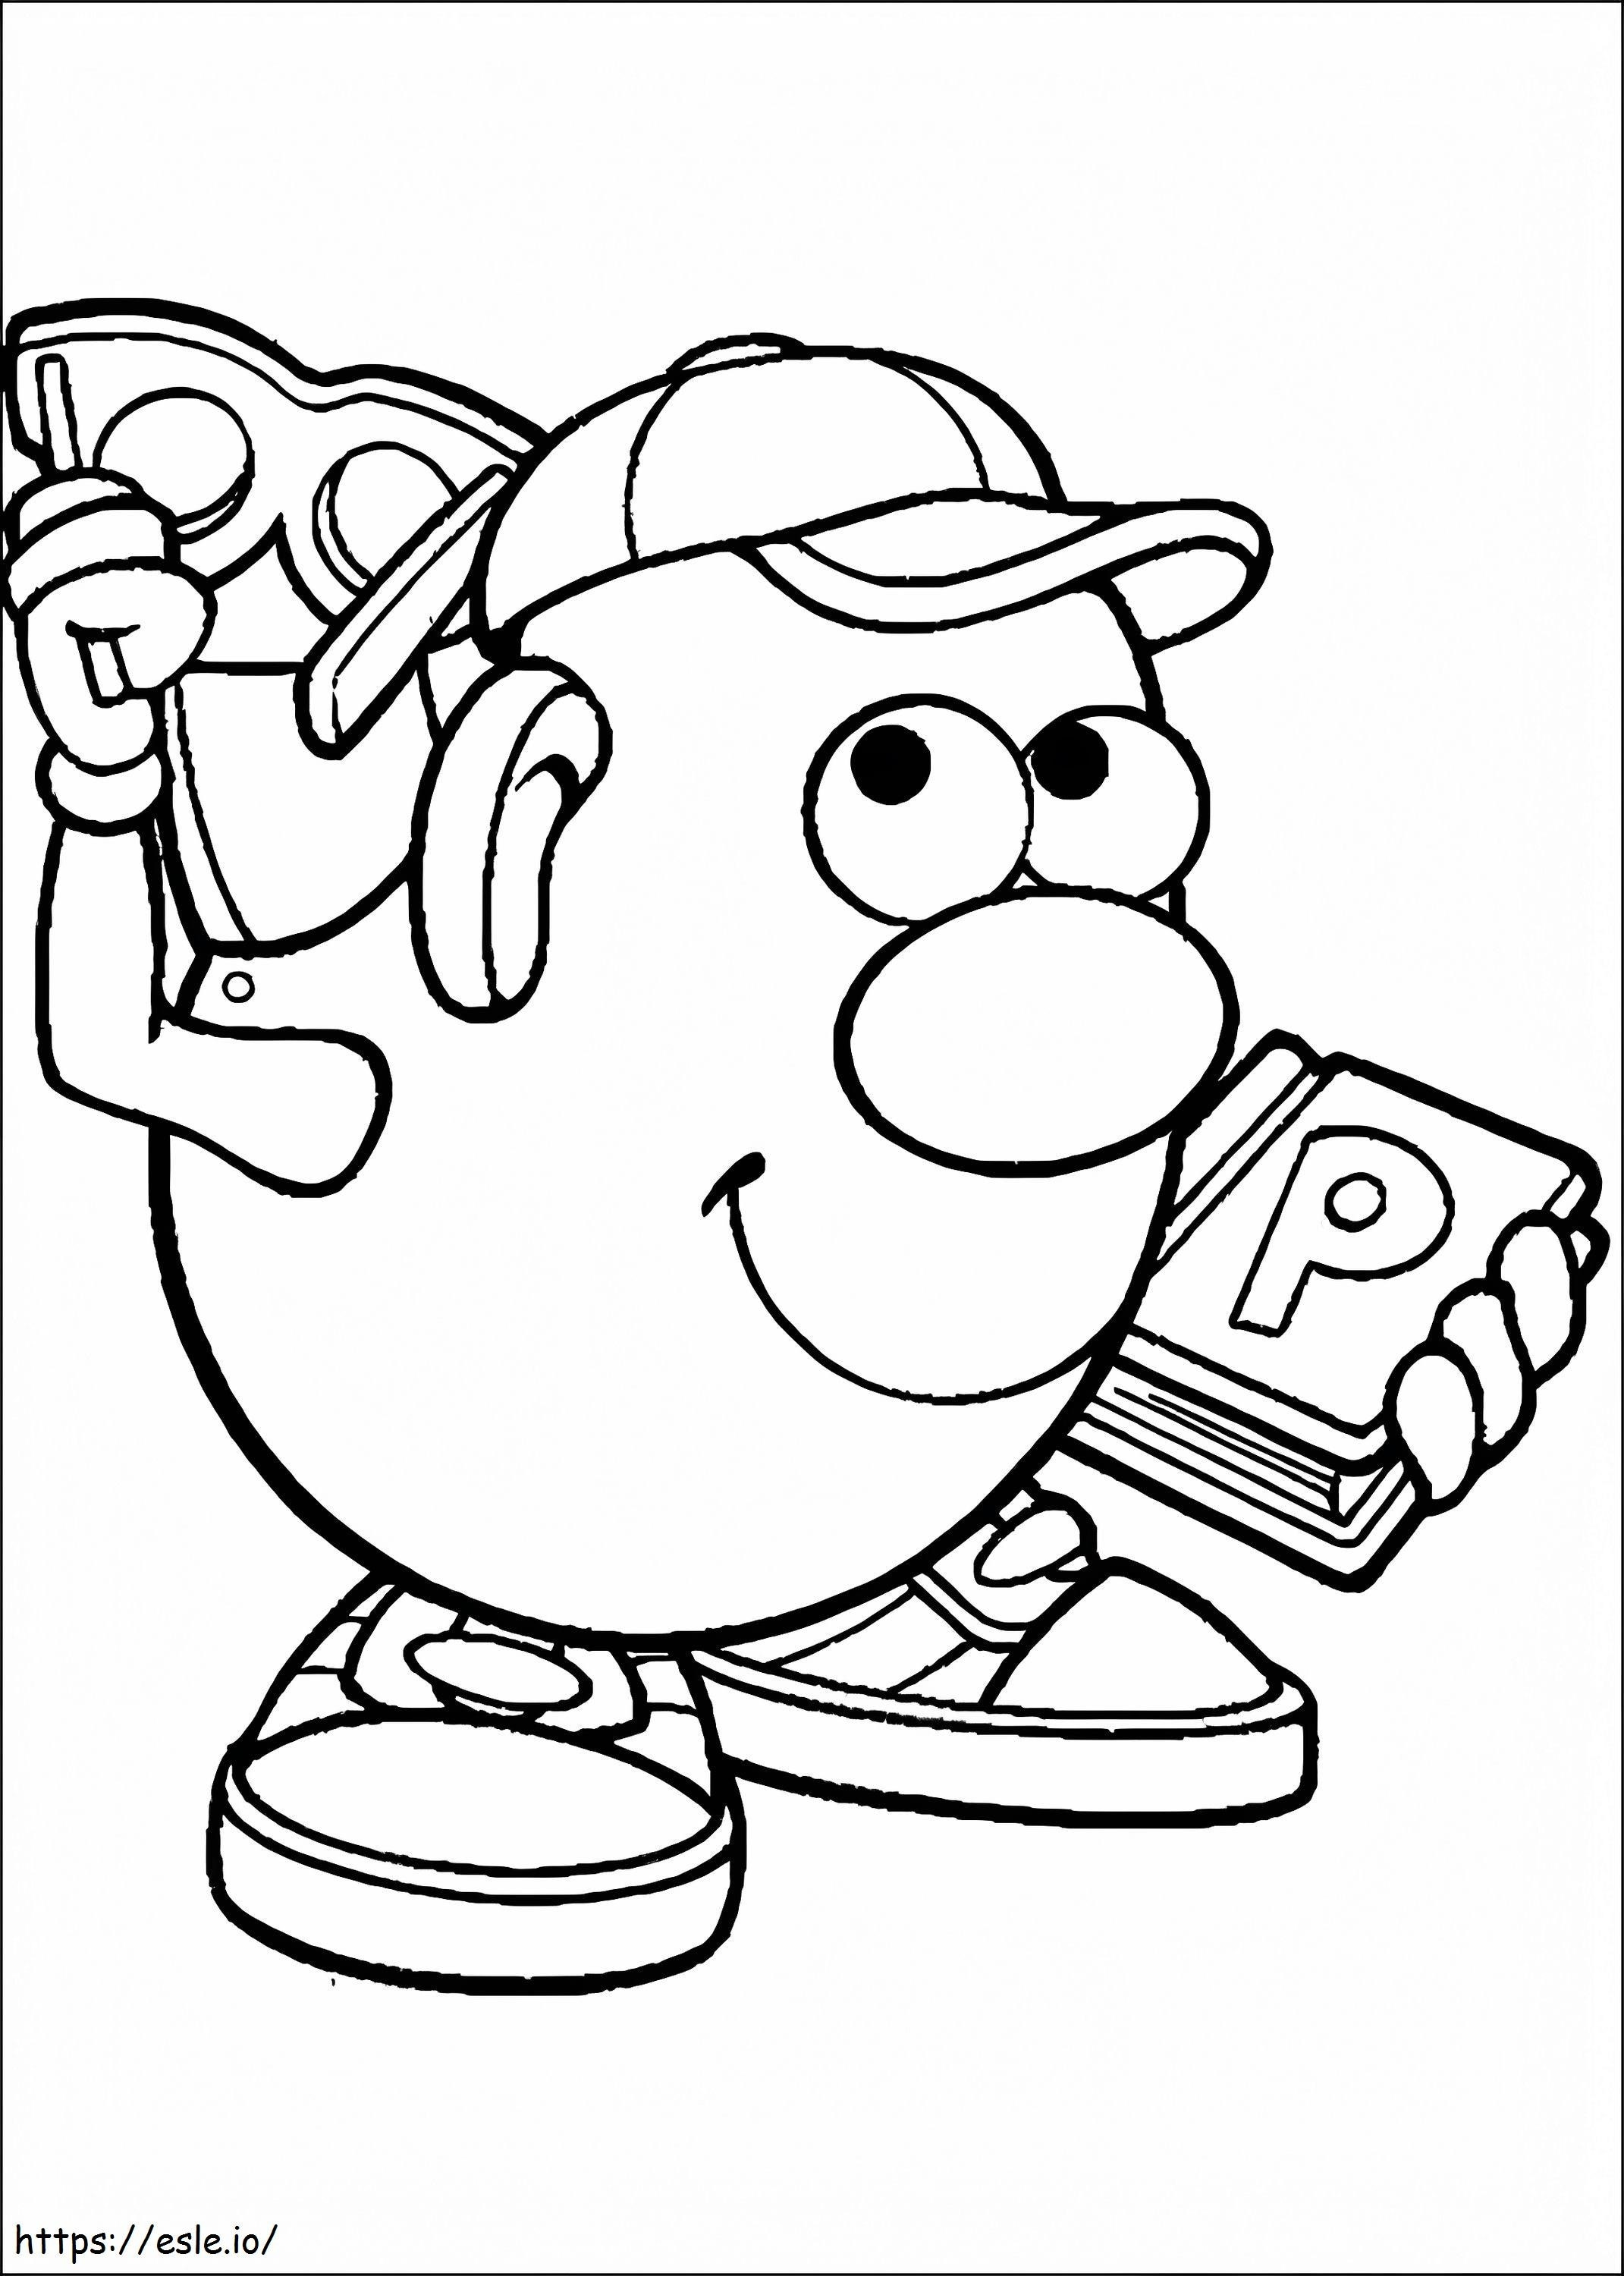 Mr. Potato Head Free Printable coloring page